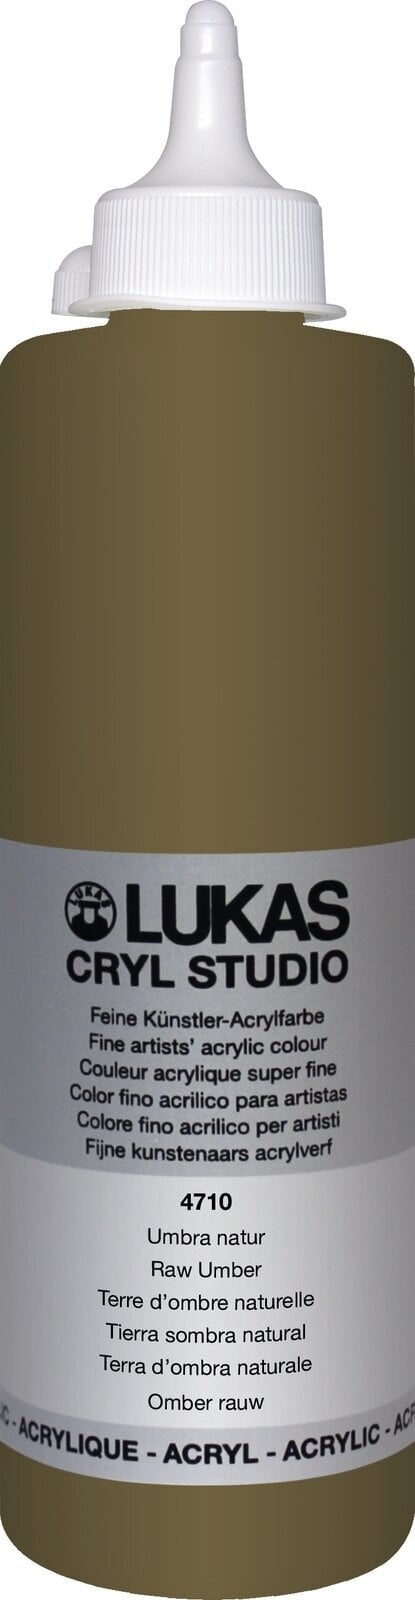 Pintura acrílica Lukas Cryl Studio Acrylic Paint Plastic Bottle Acrylic Paint Raw Umber 500 ml 1 pc